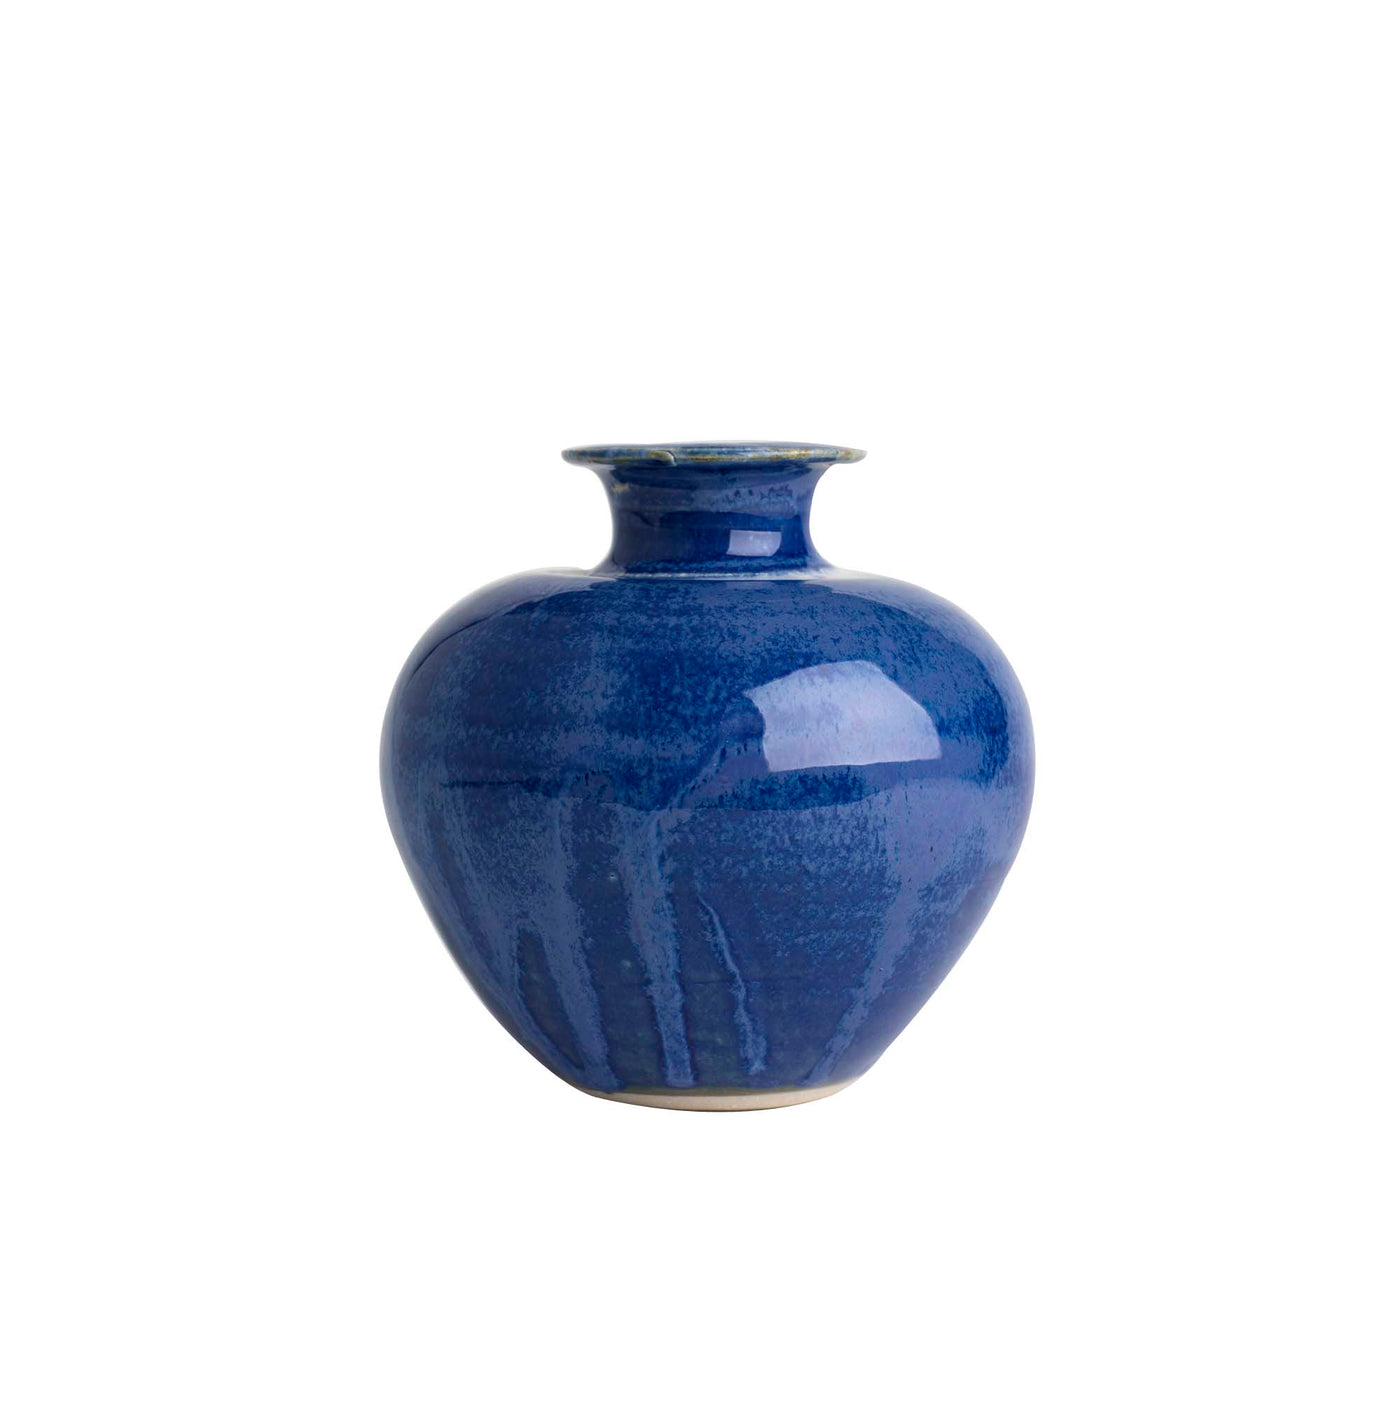 Small Posy Jar (3020) Louis Mulcahy Pottery